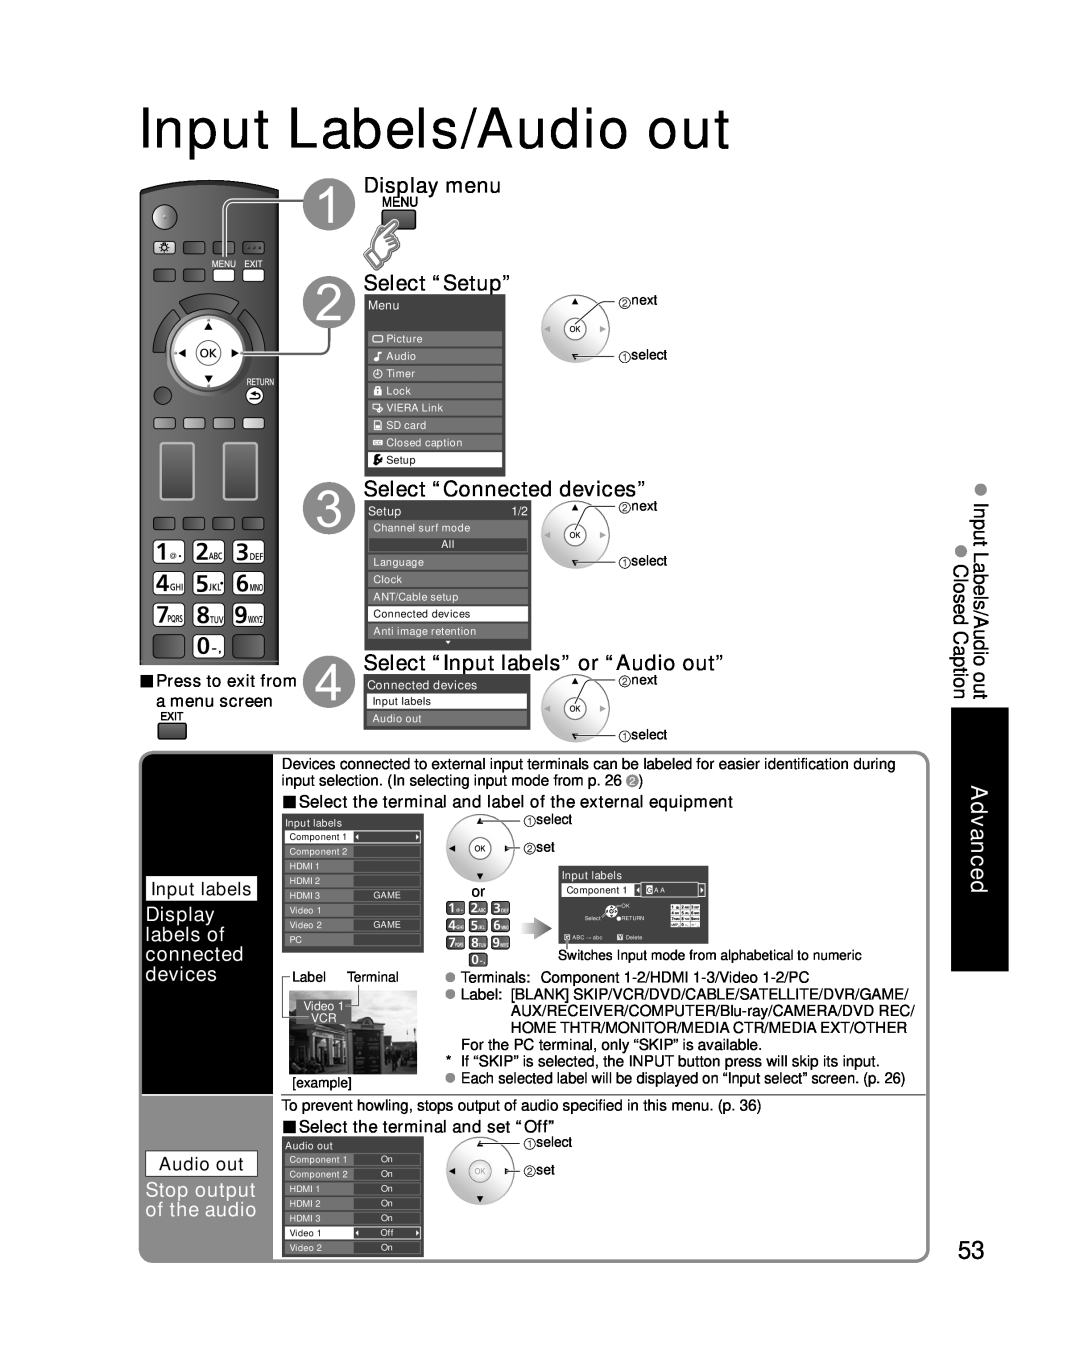 Panasonic TC-P54G10 Input Labels/Audio out, Select “Connected devices”, Select “Input labels” or “Audio out”, Advanced 